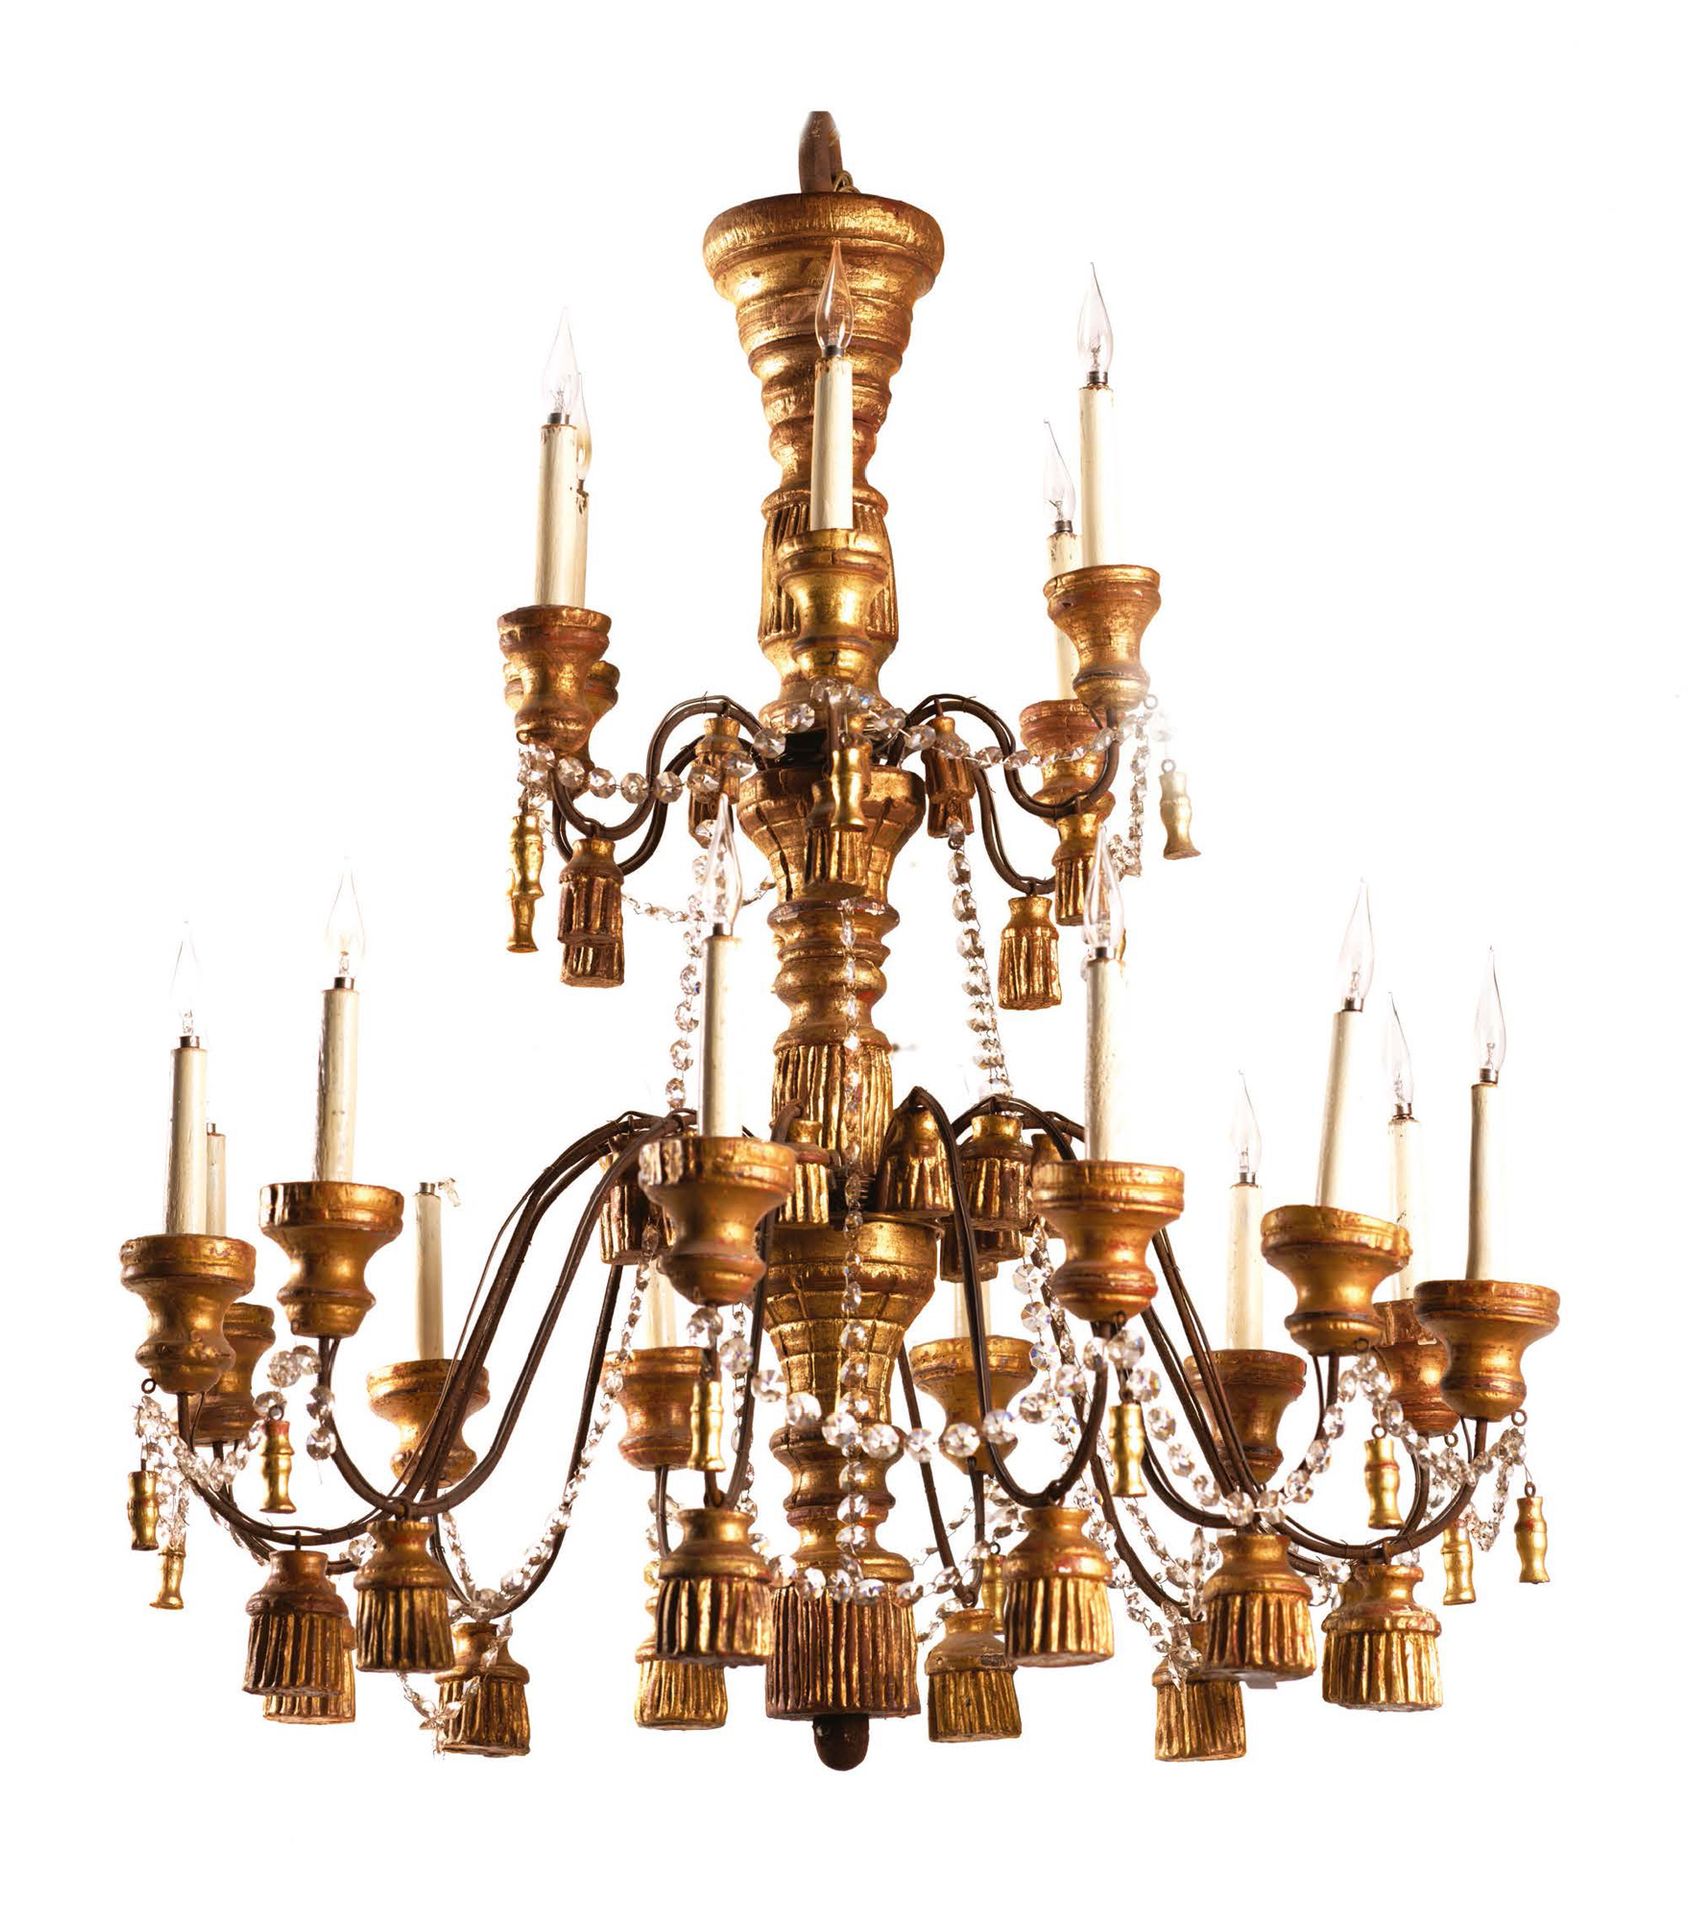 Null 一盏雕刻和镀金的木制吊灯，十八个灯臂排列成两行。轴上装饰着通花。
1900年左右。
H_96 cm W_85 cm。